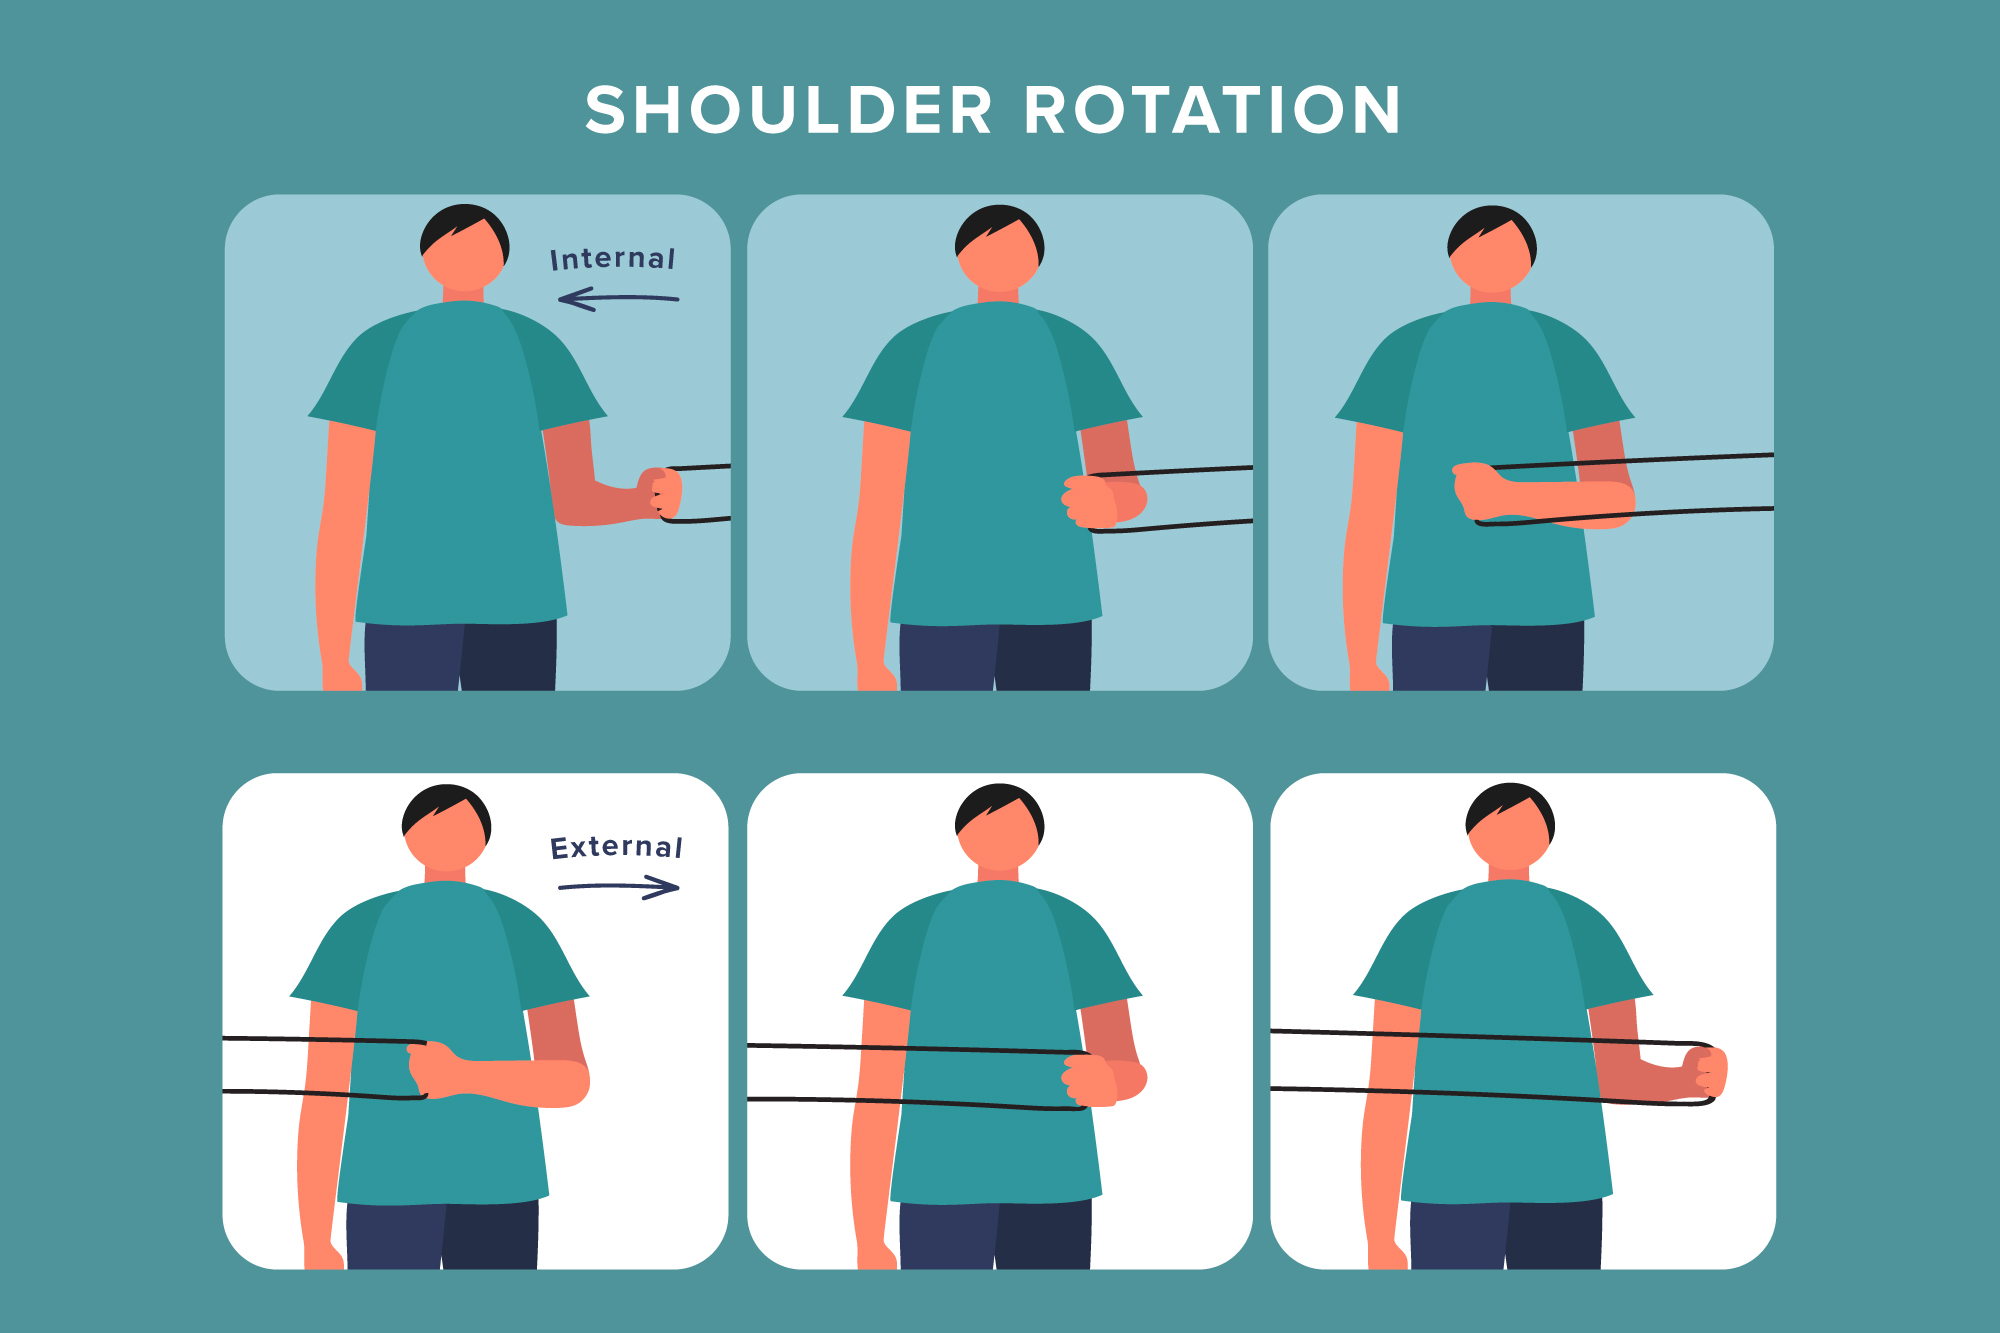 internal and external rotator cuff exercises